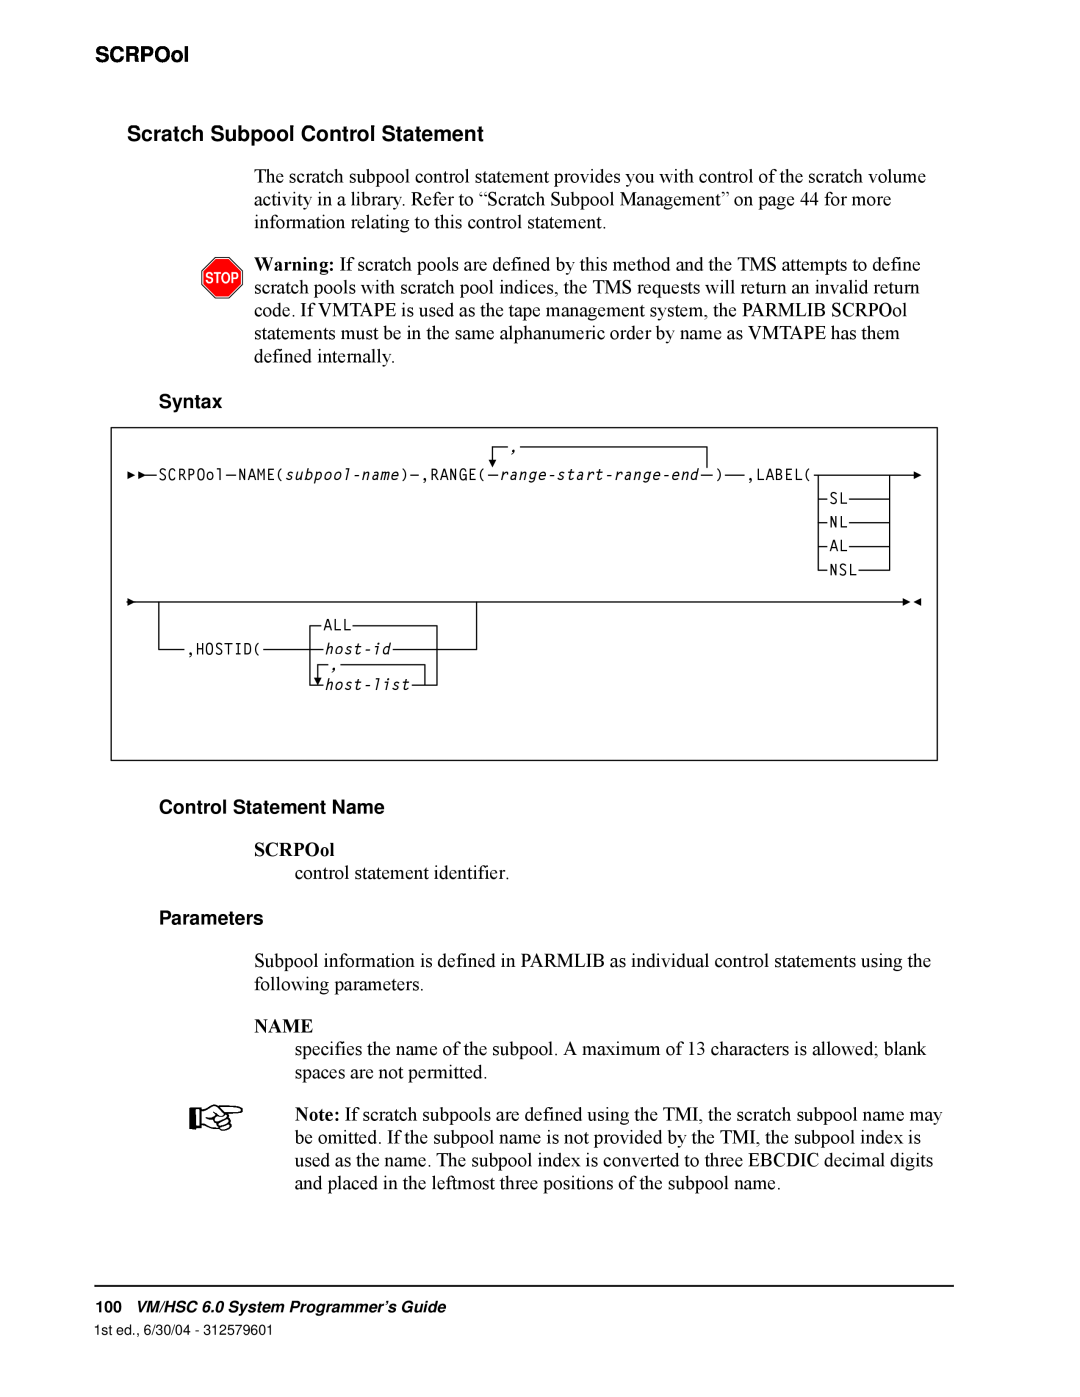 StorageTek 6 manual SCRPOol Scratch Subpool Control Statement, Syntax, Control Statement Name, Parameters 